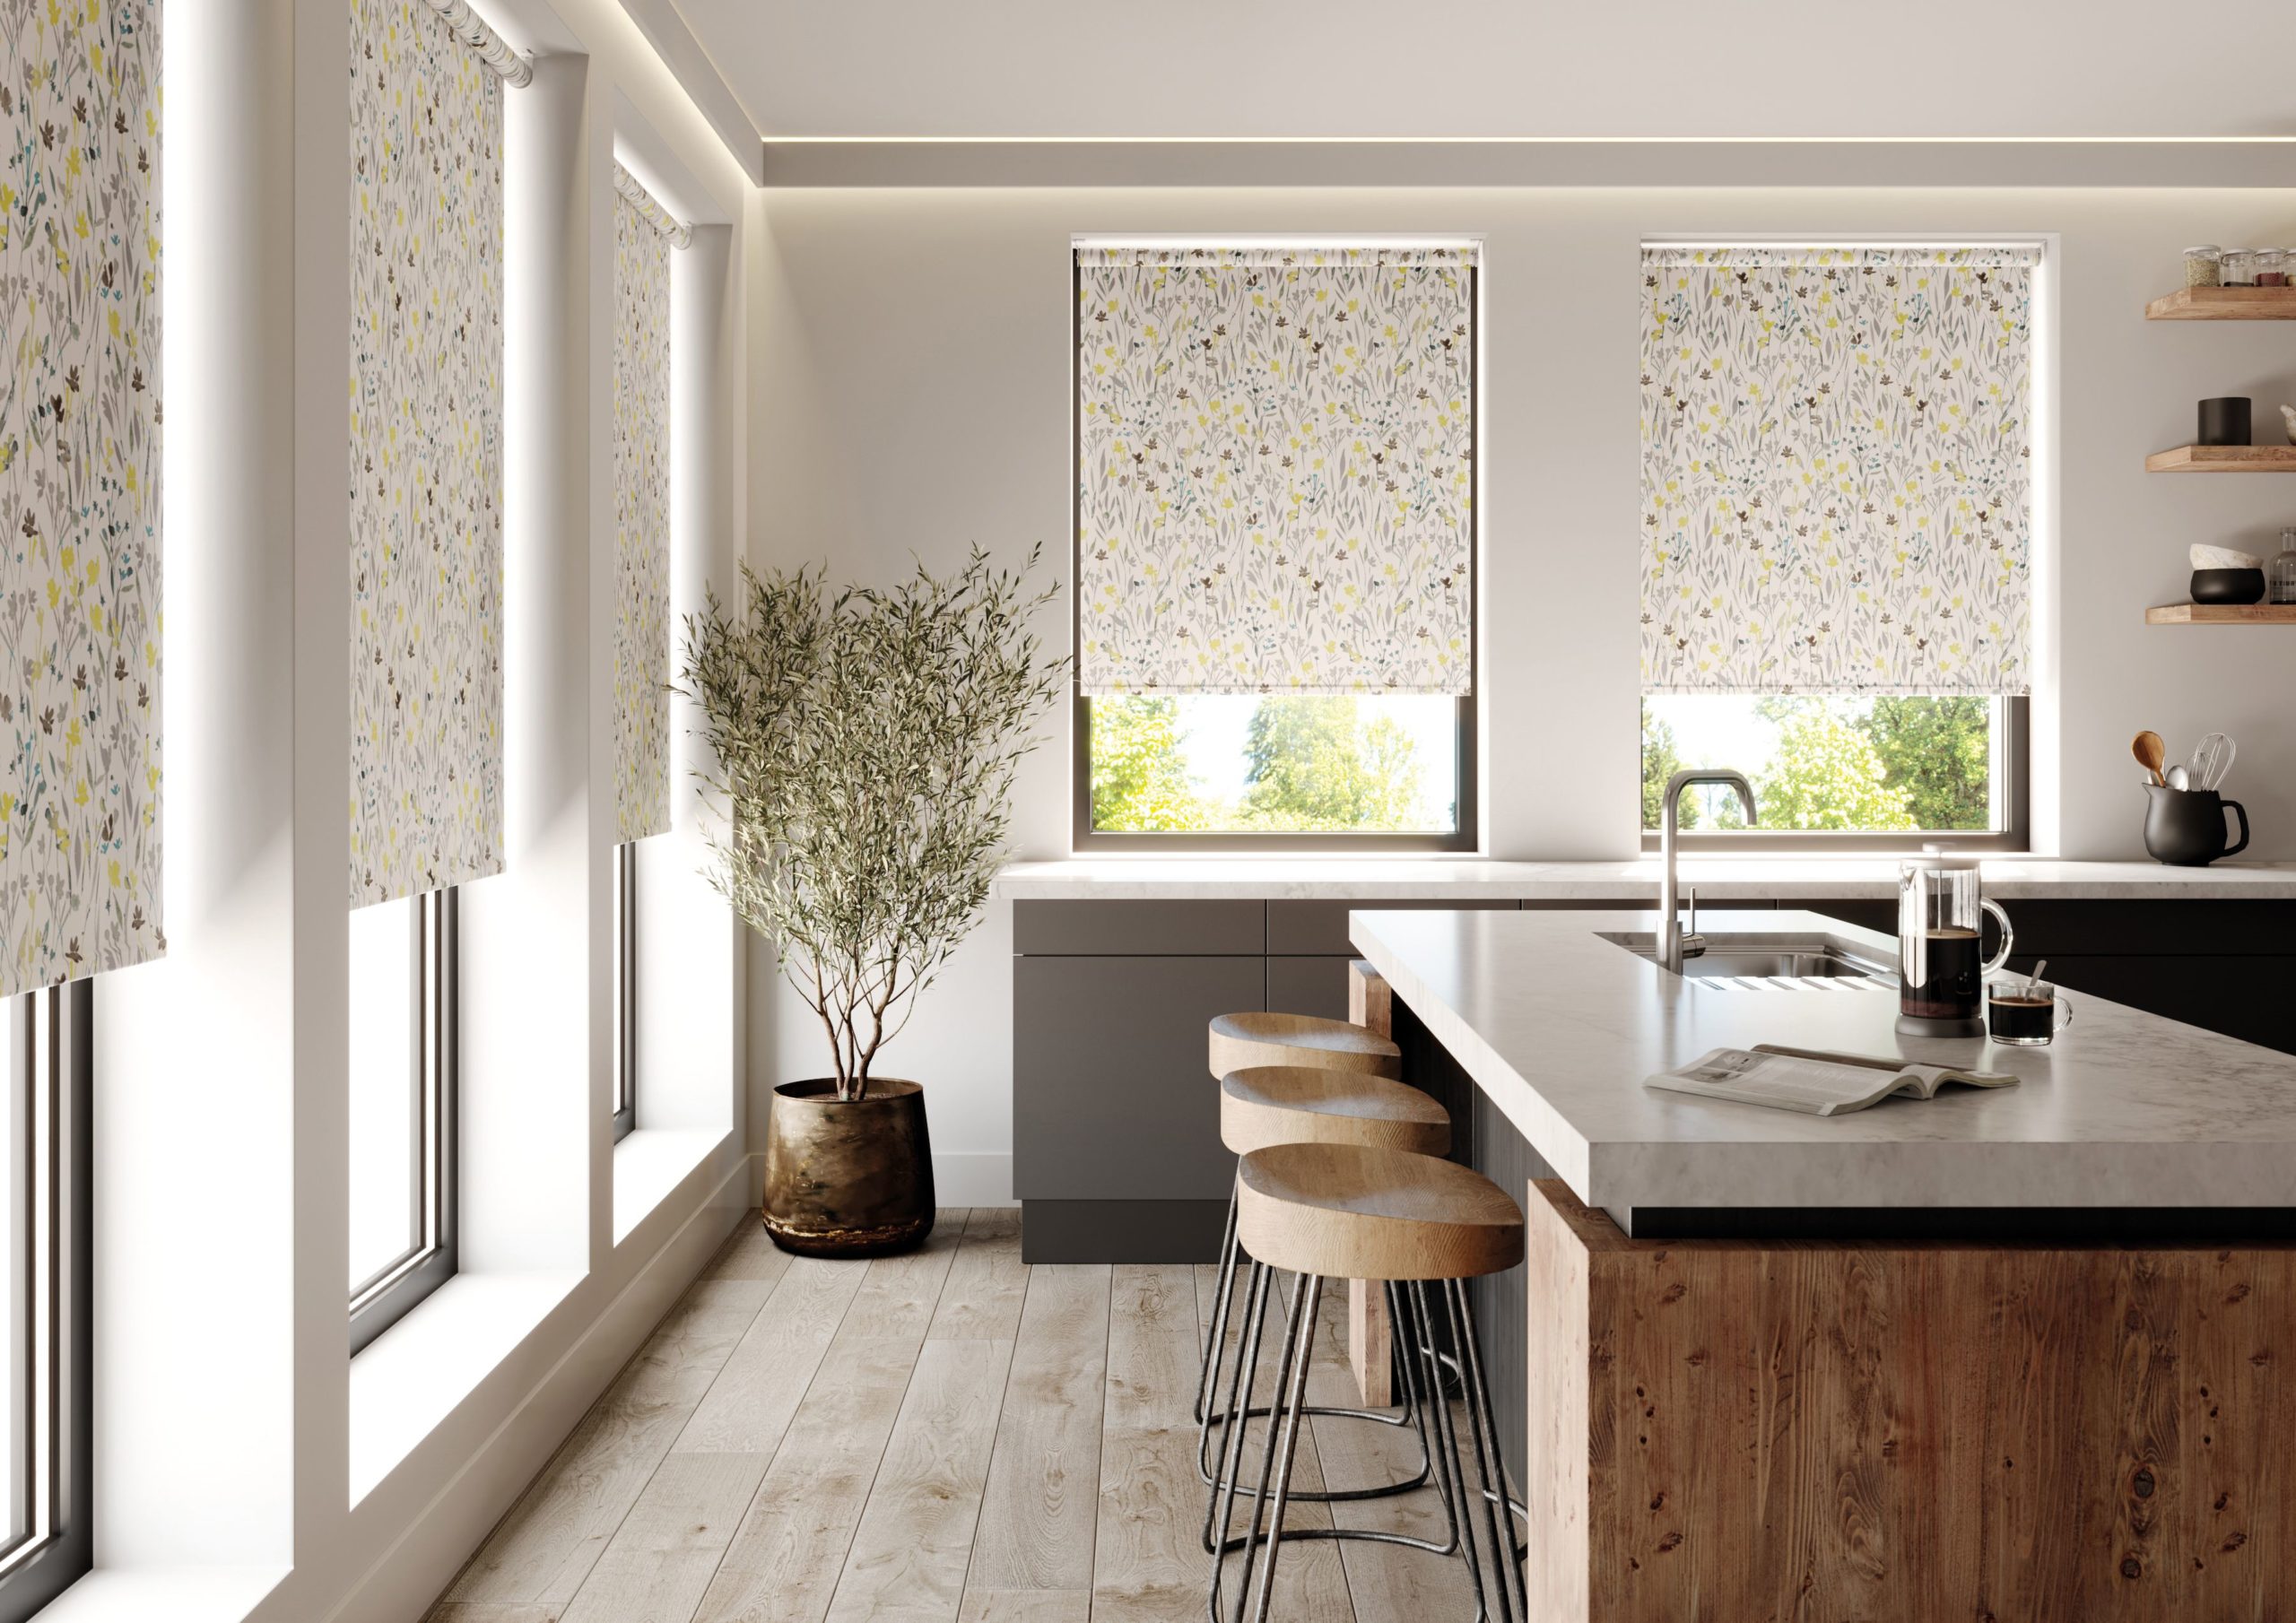 Flowery kitchen blinds